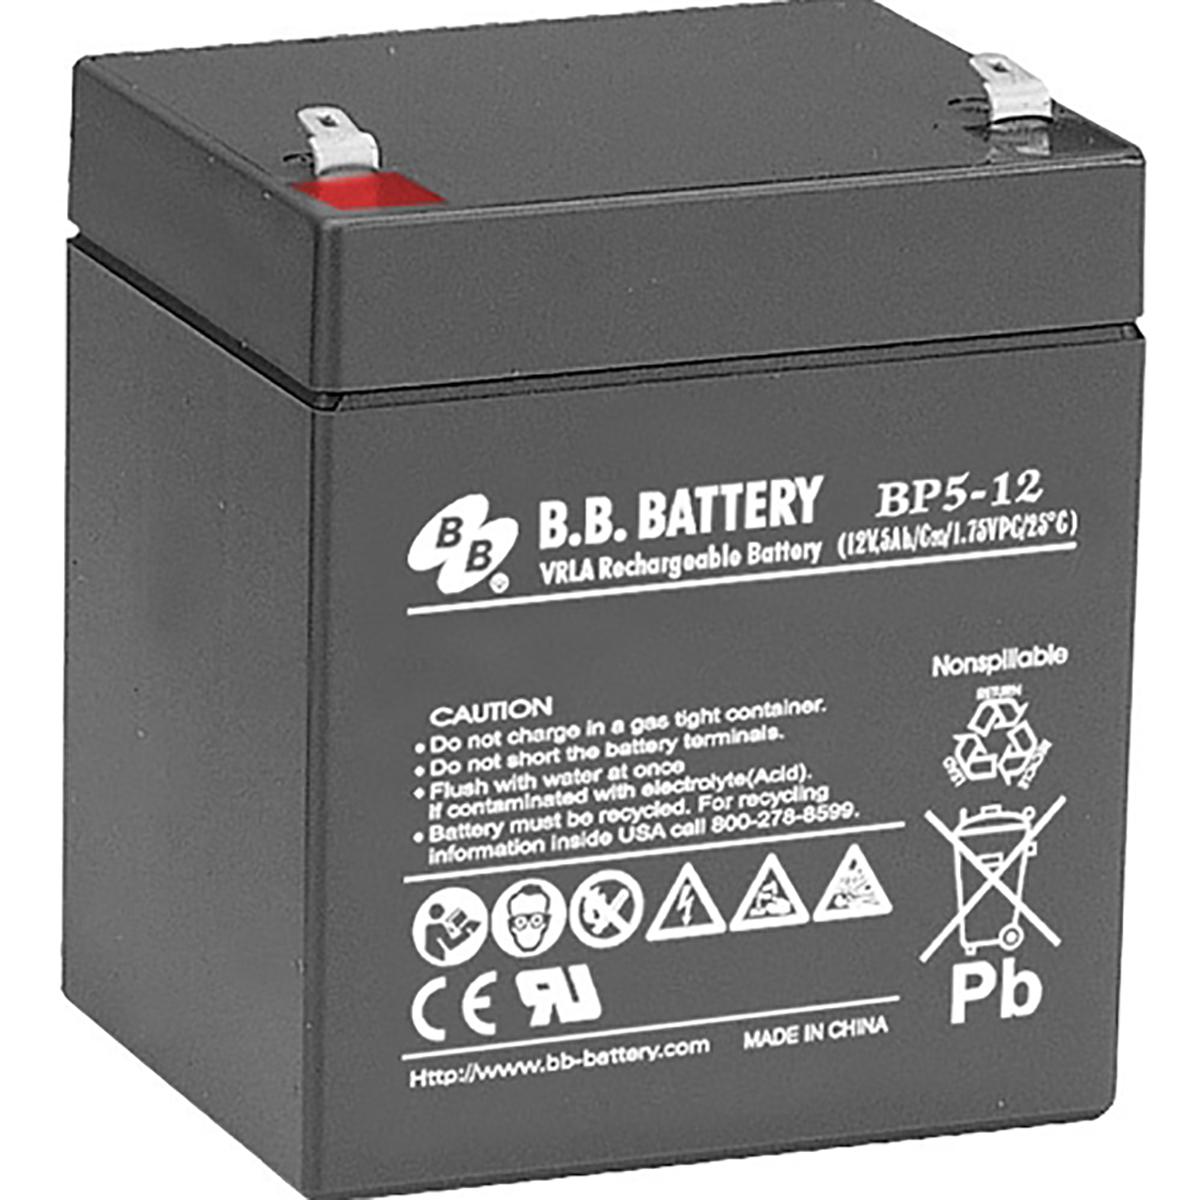 BP 5-12 B.B Battery